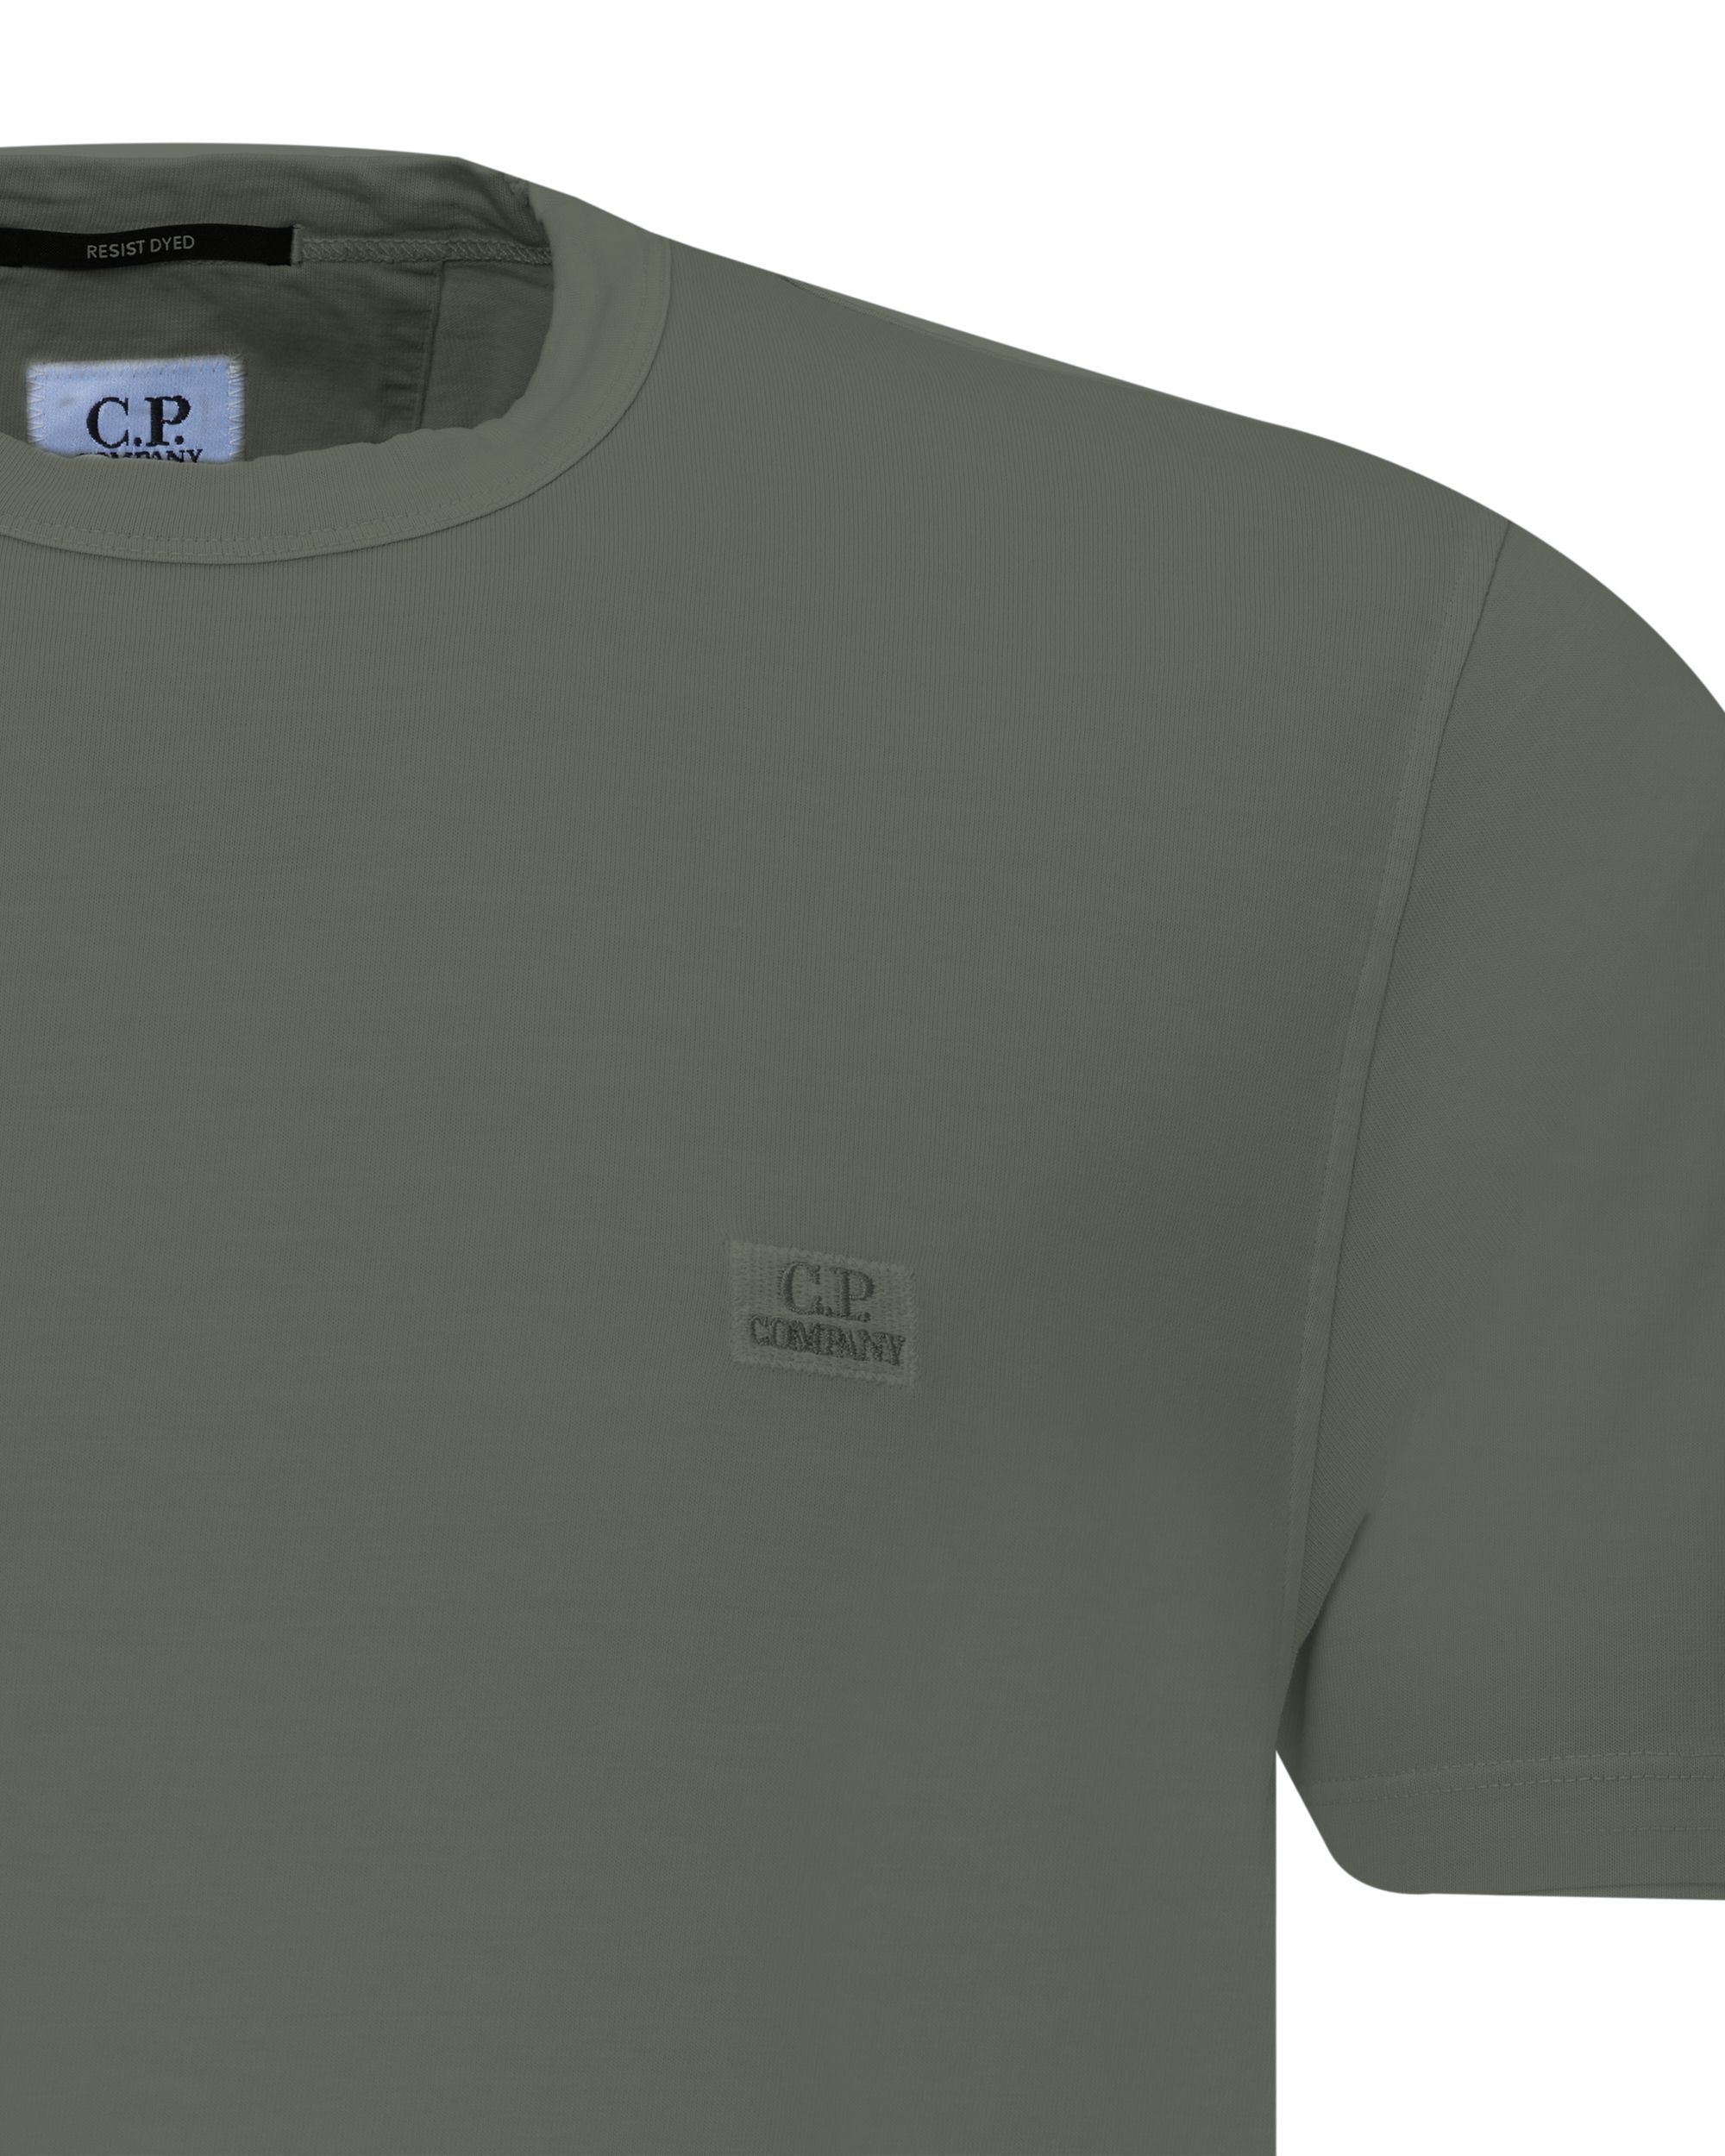 C.P Company T-shirt KM Groen 078719-002-S